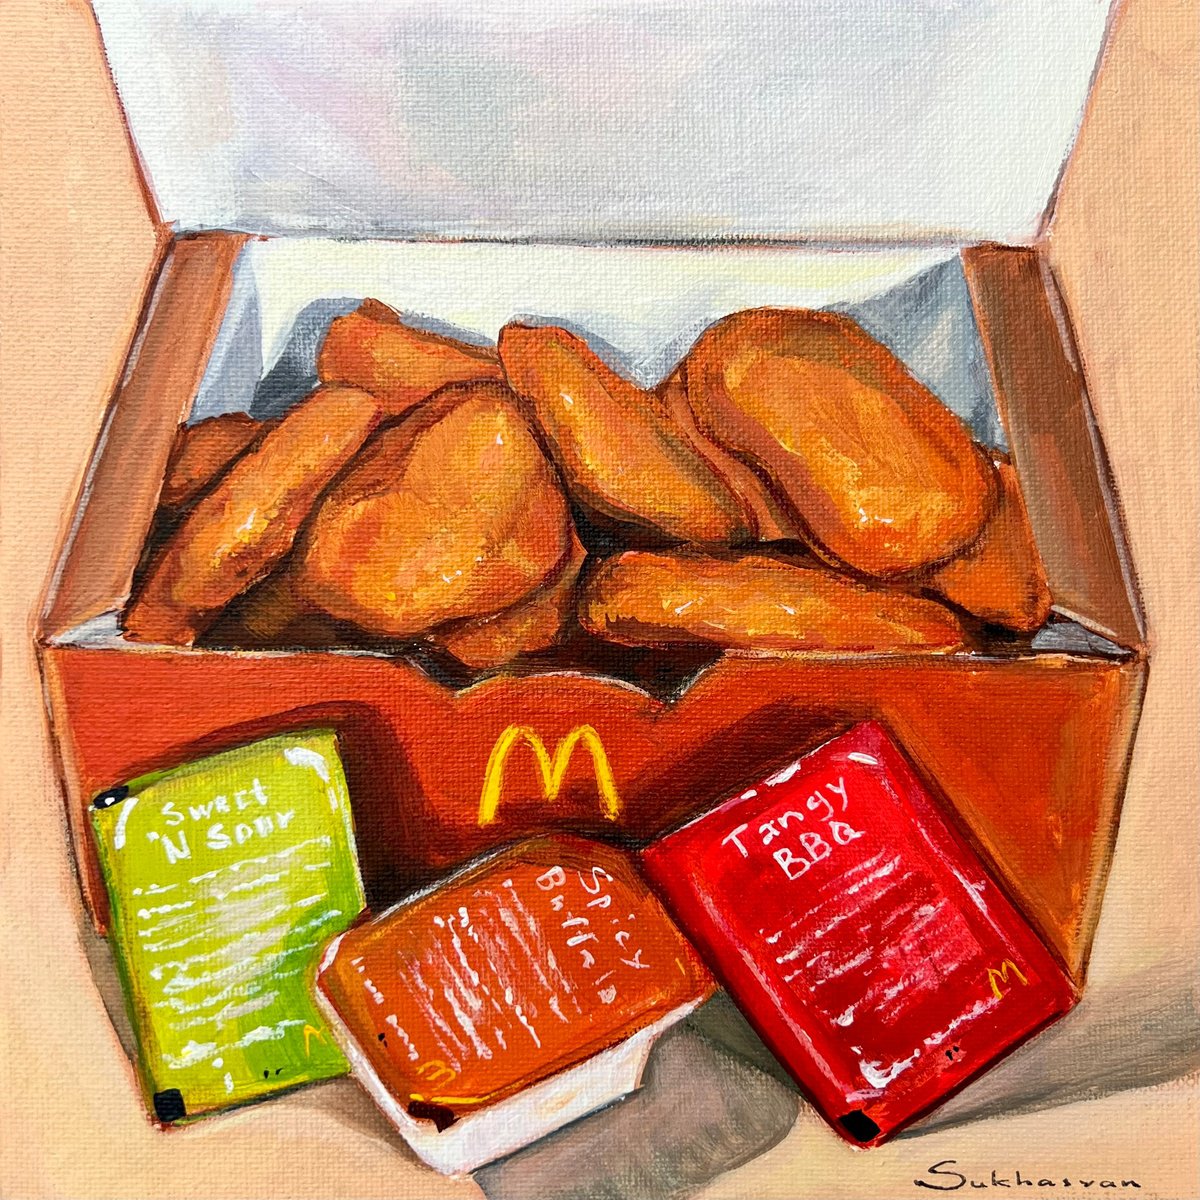 McDonalds Chicken Nuggets by Victoria Sukhasyan